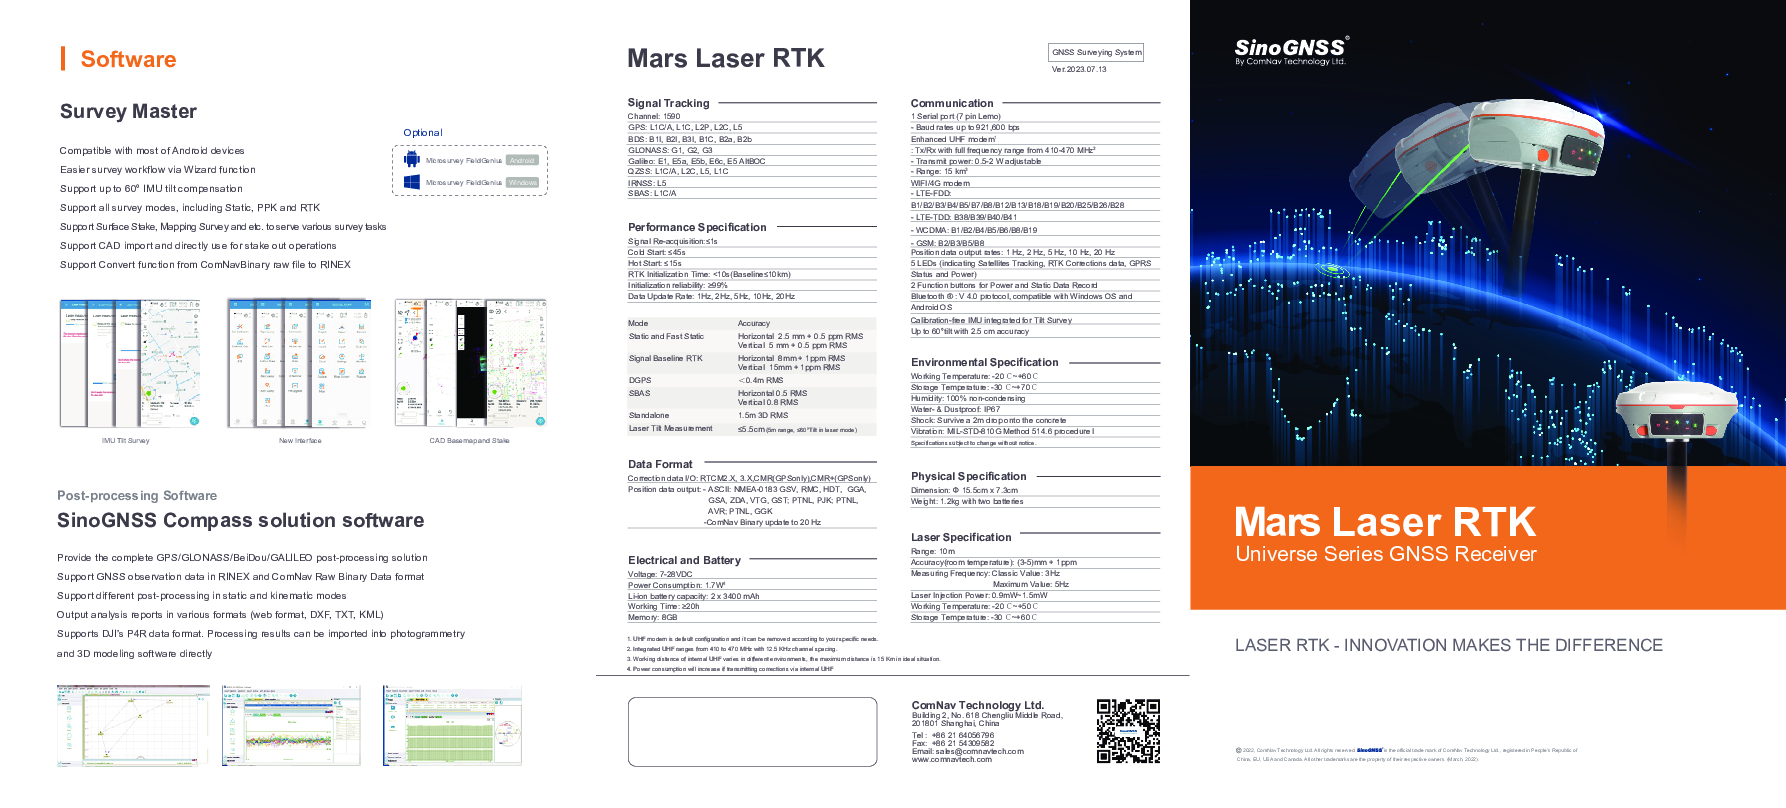 sinognss-mars-laser-rtk.pdf